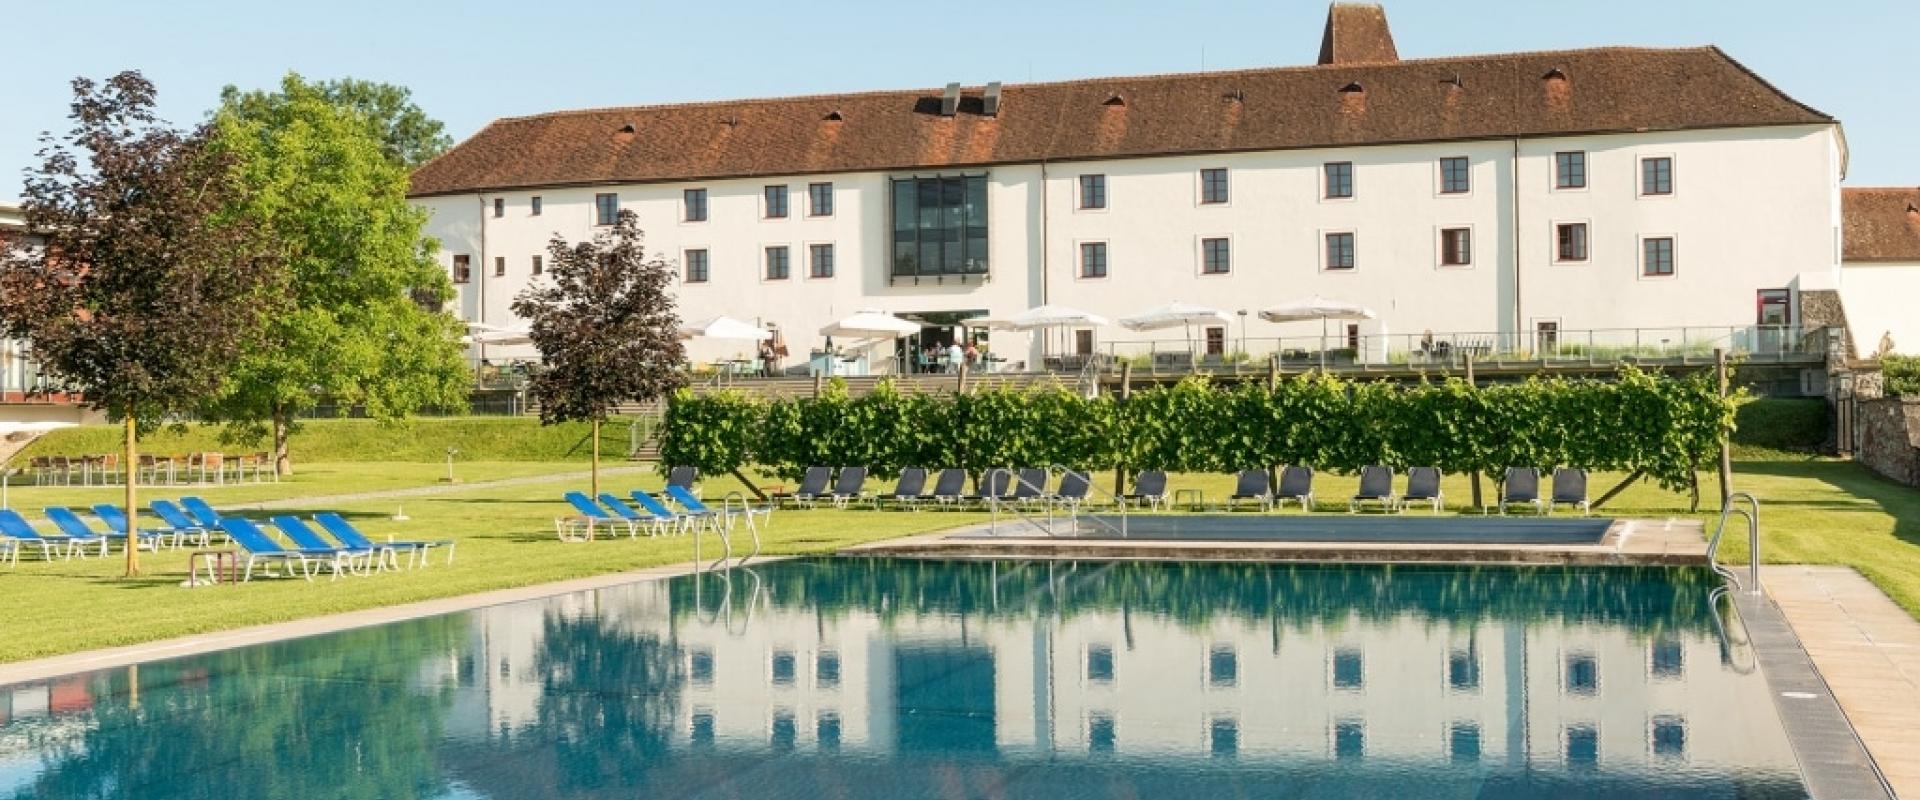 30727 Ebike Hotel Schloss Seggau Steiermark Garten 2.jpg